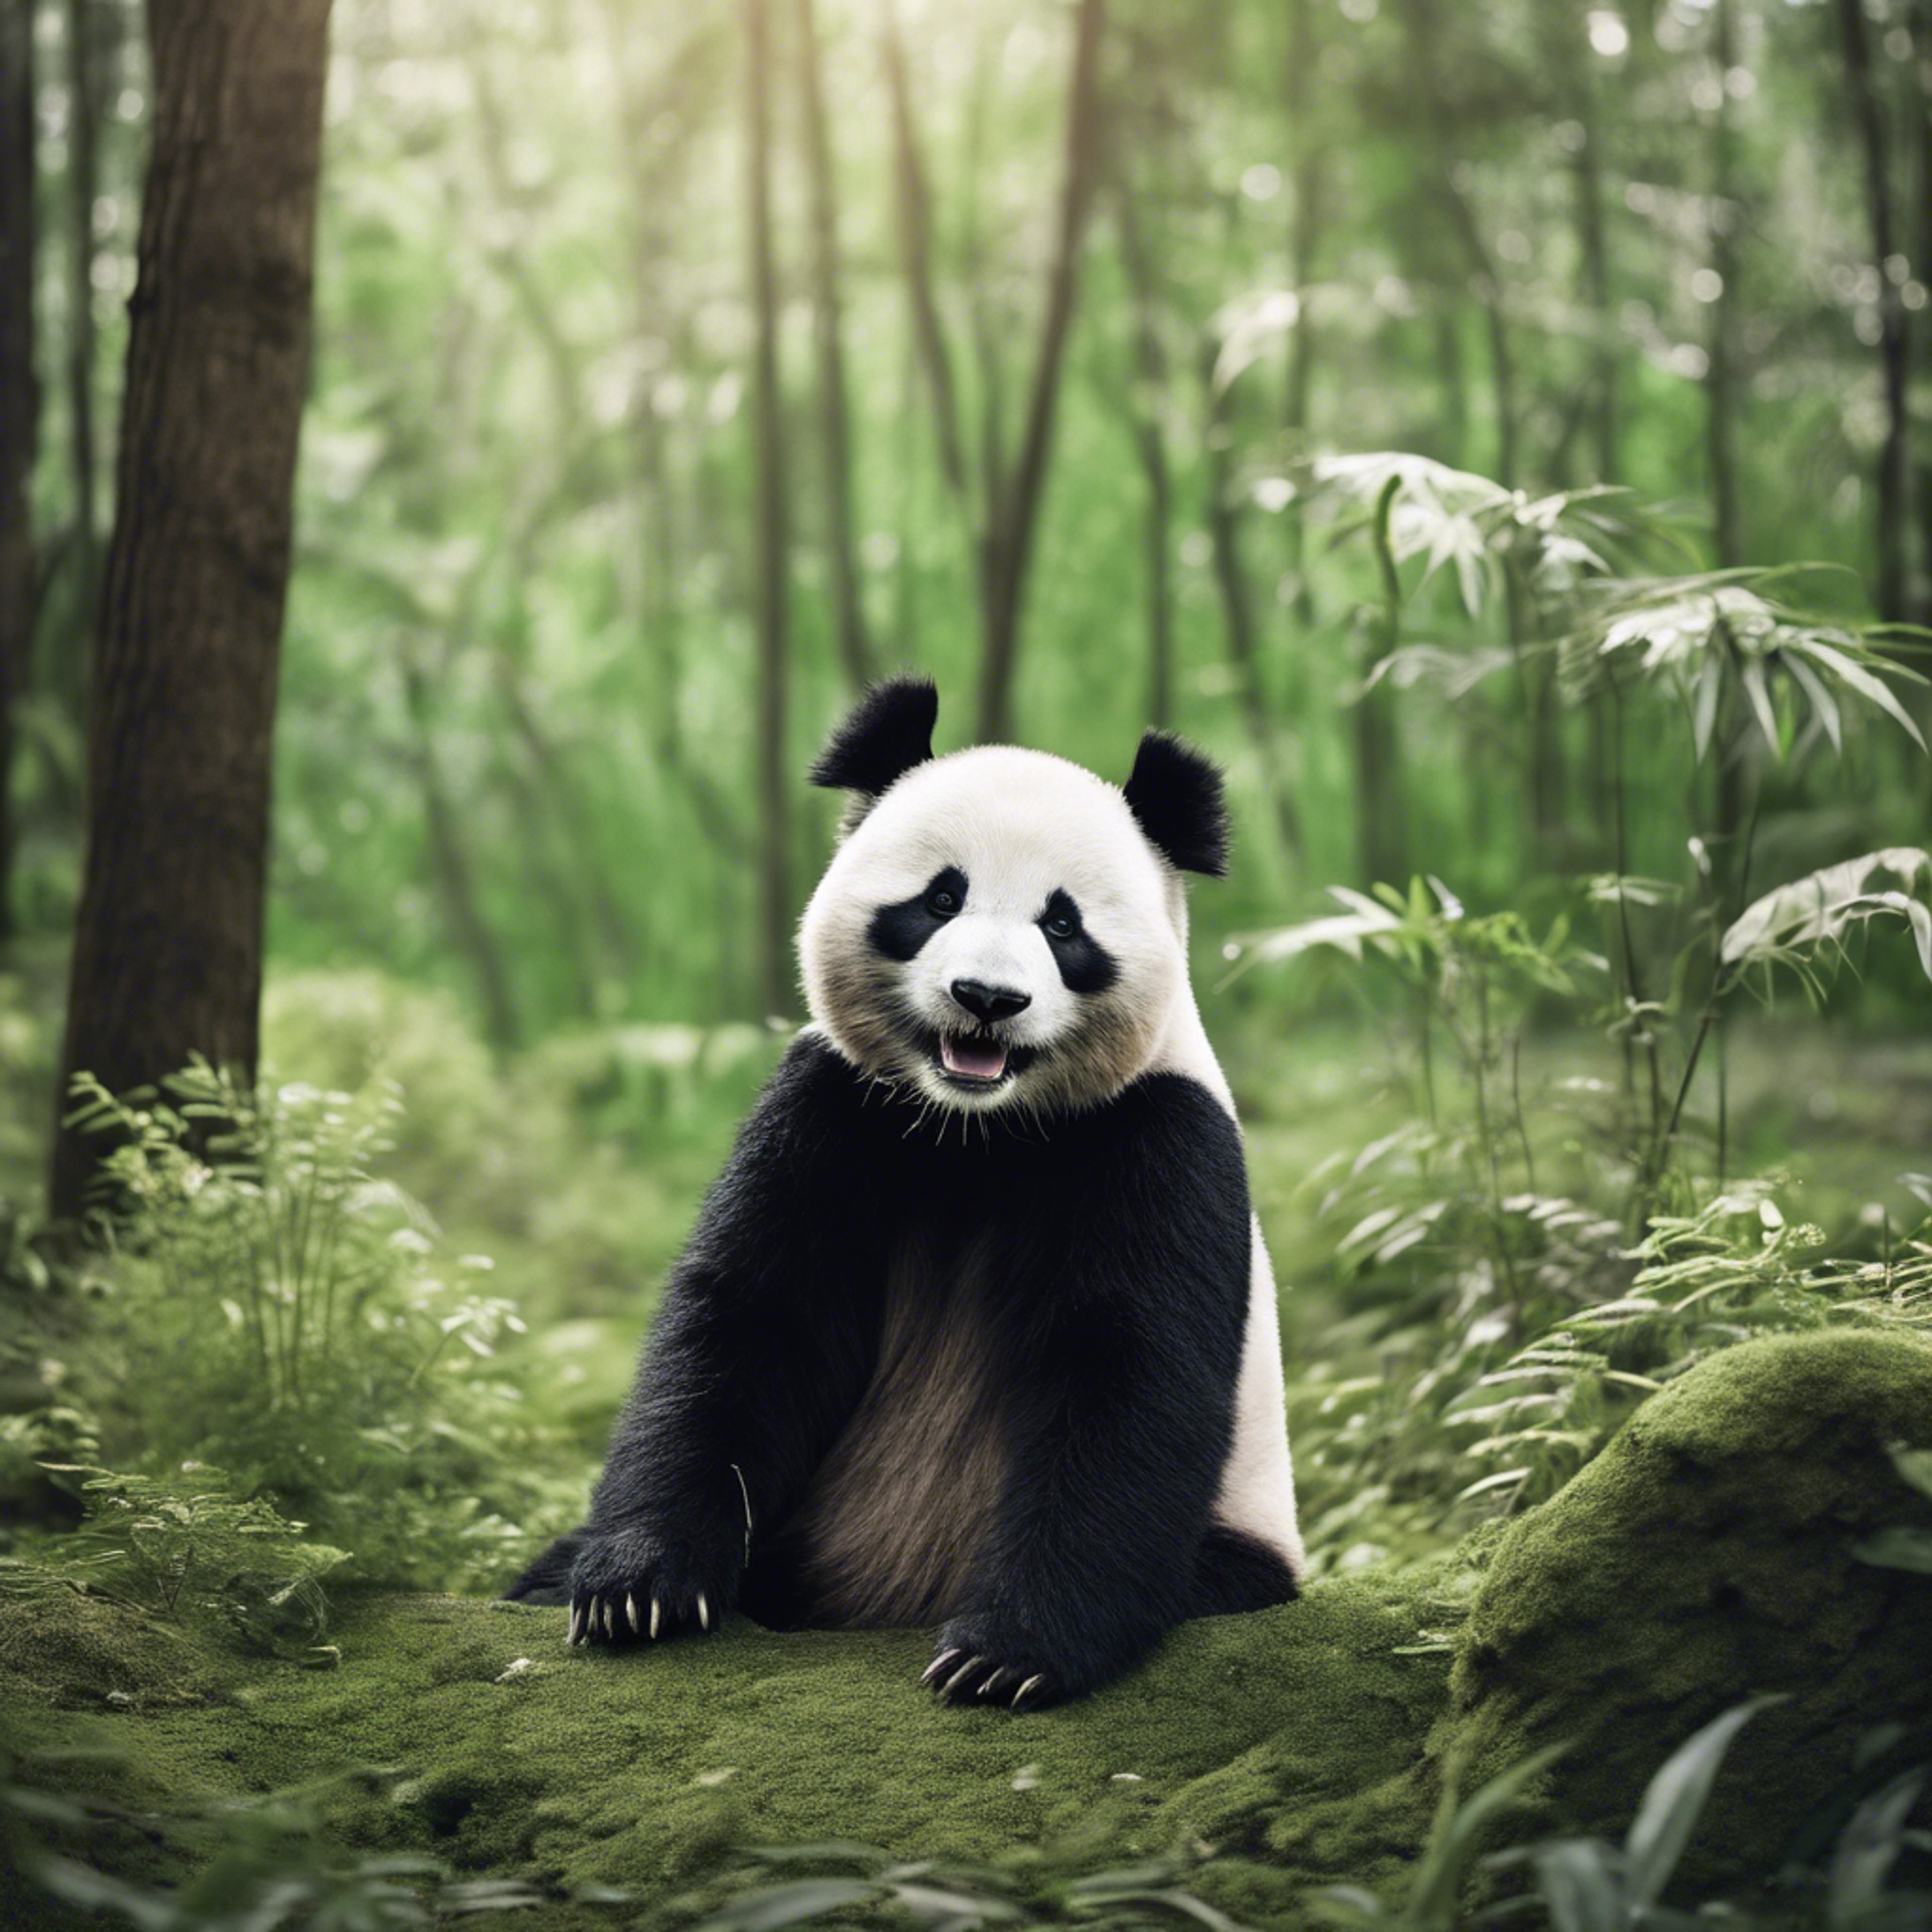 A laughing panda bear, celebrating a fun day in black, white and green wilderness. 墙纸[a059d50594da43a98985]